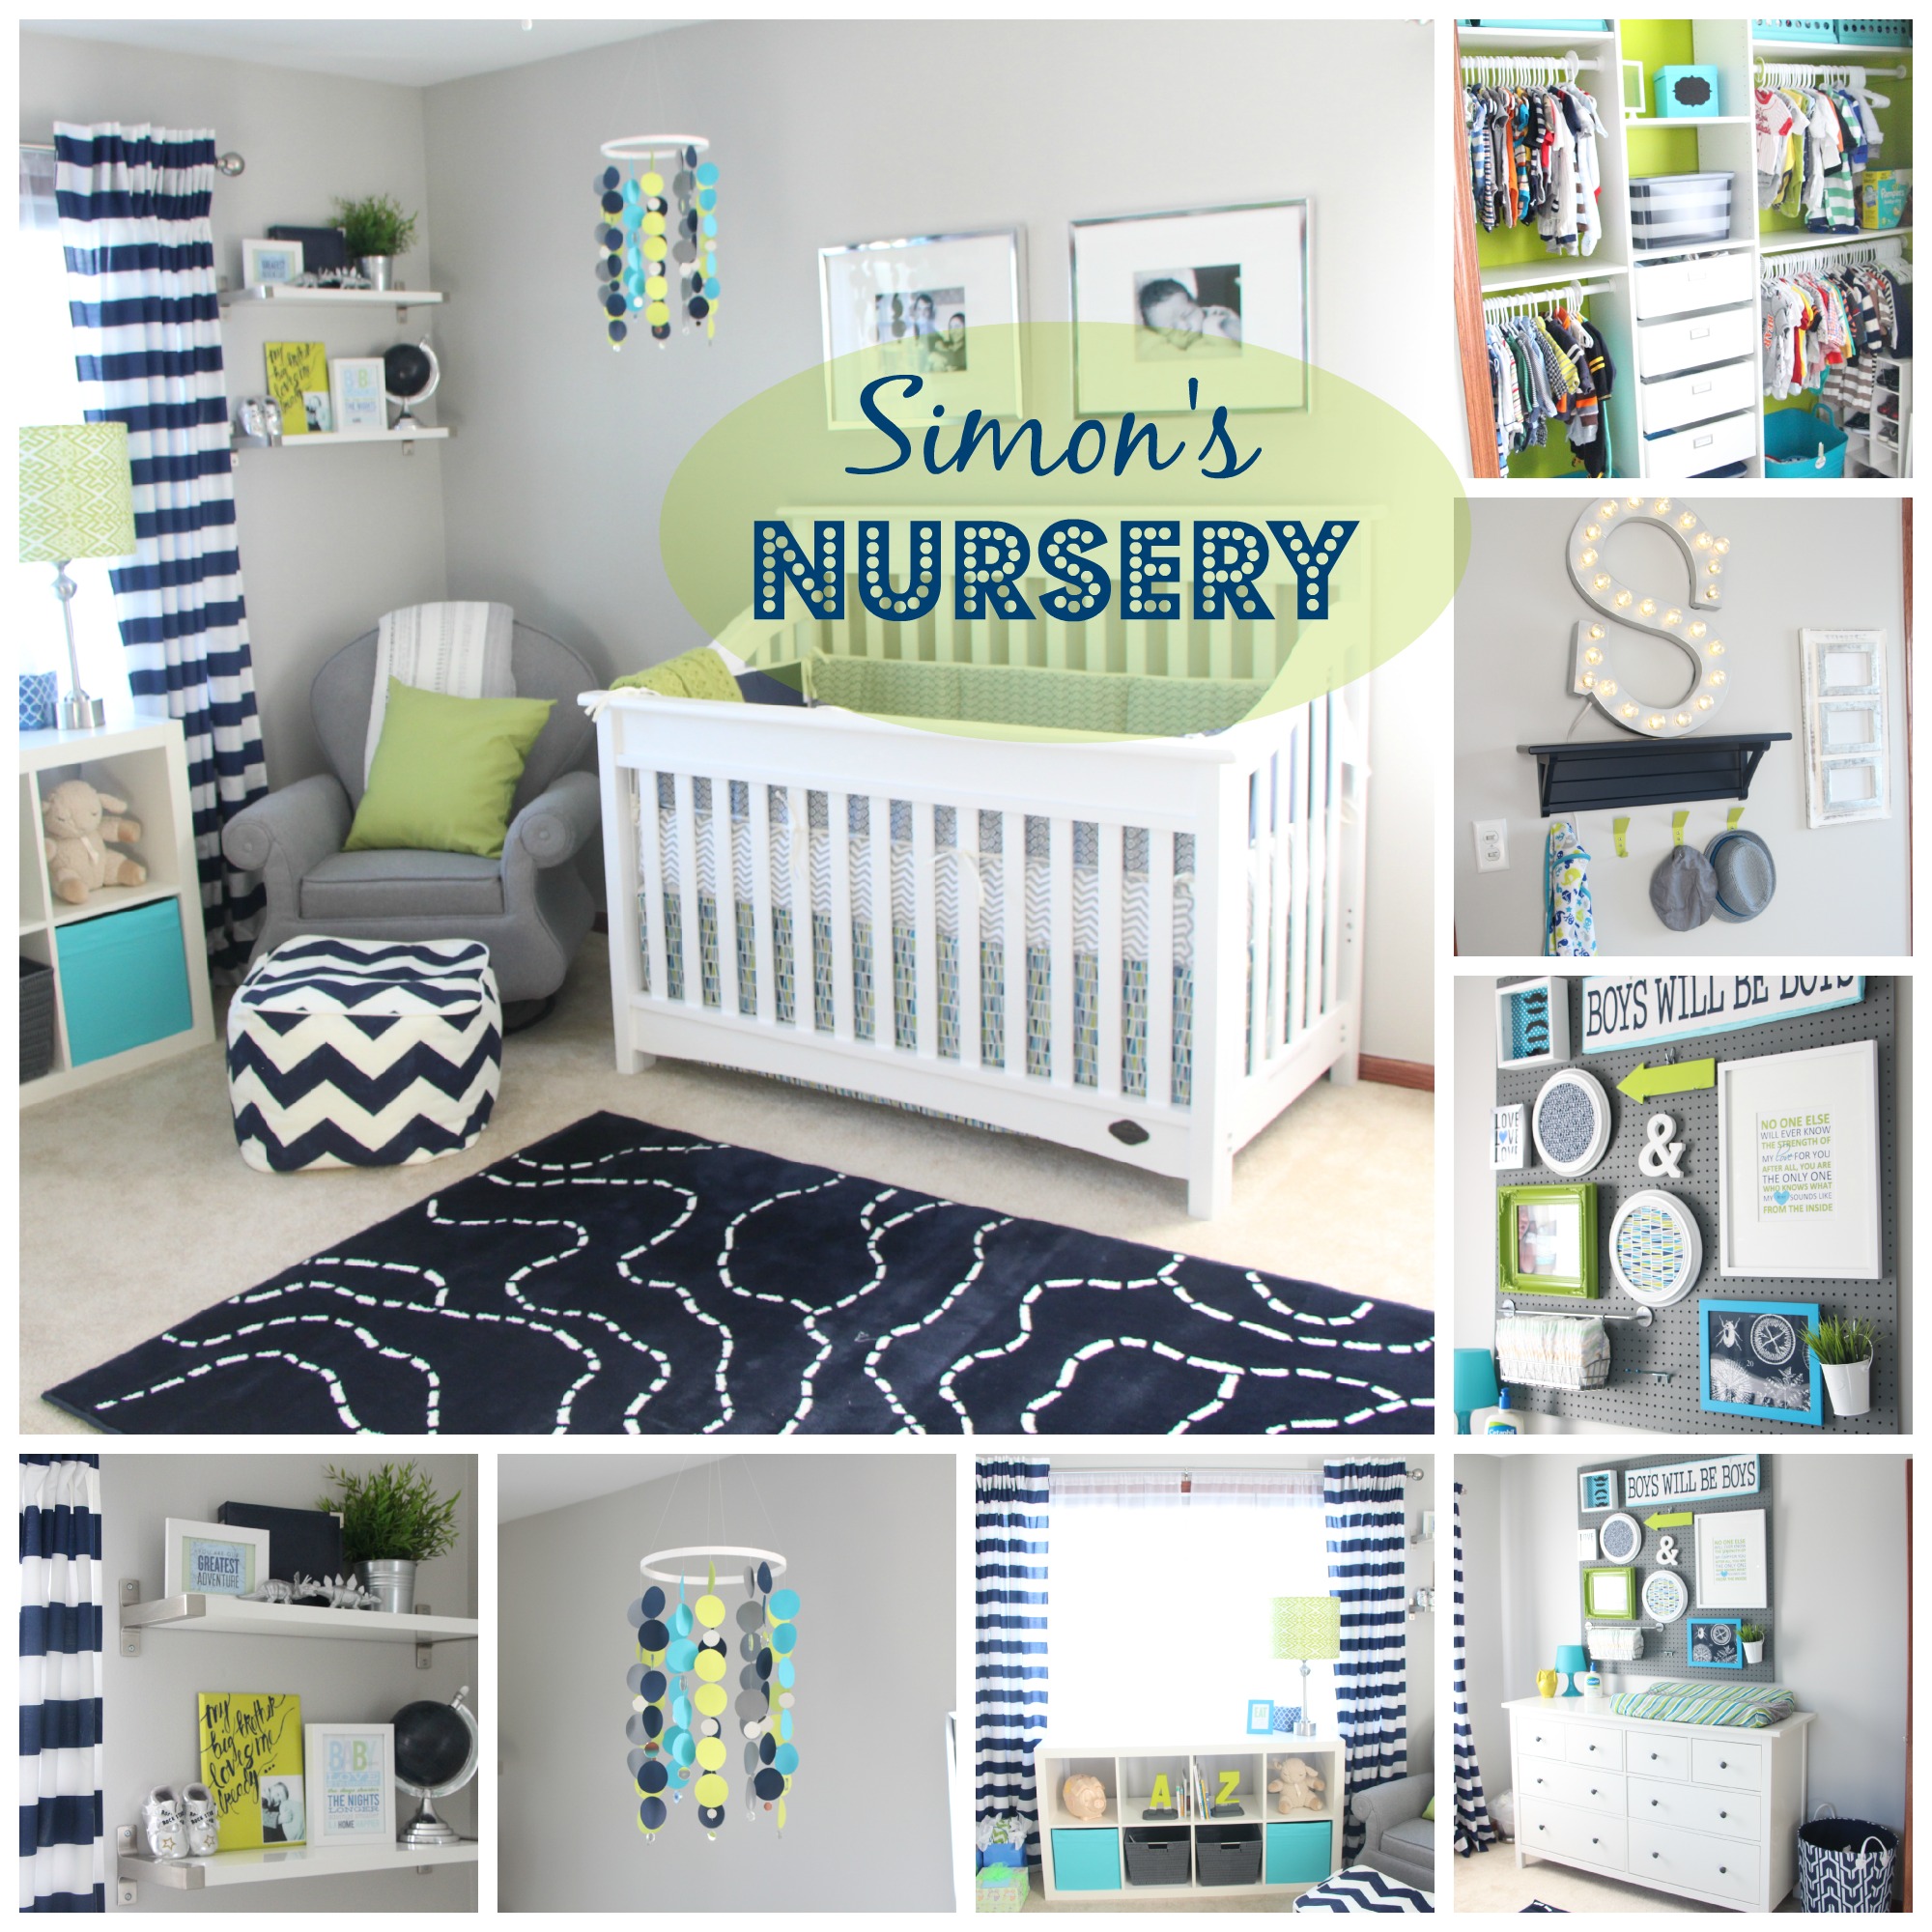 Simon's Nursery Reveal | DIY Nursery | DIY decorations | navy, green & gray - DIY nursery photos & details